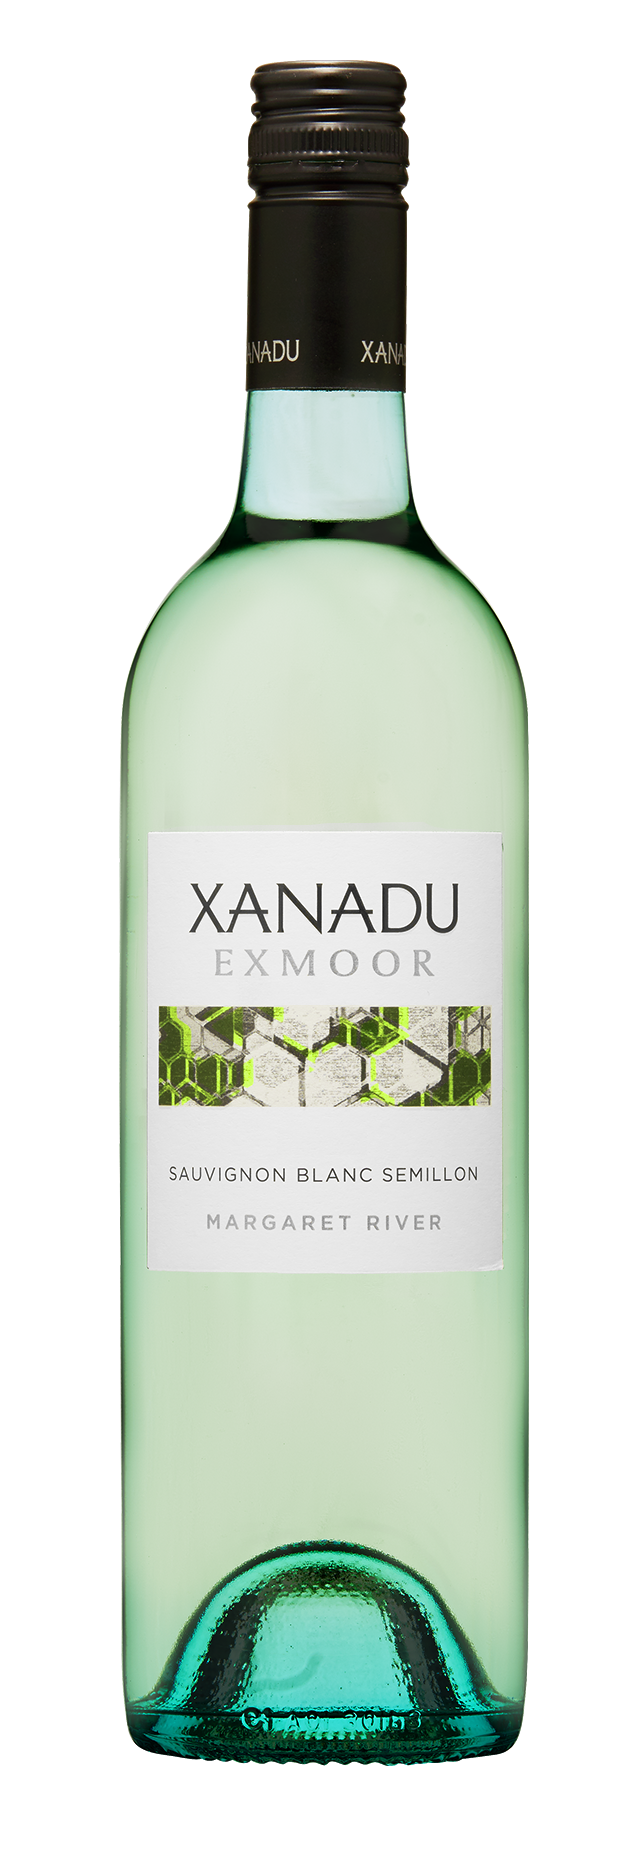 Xanadu Exmoor Sauvignon Blanc Semillion 2019